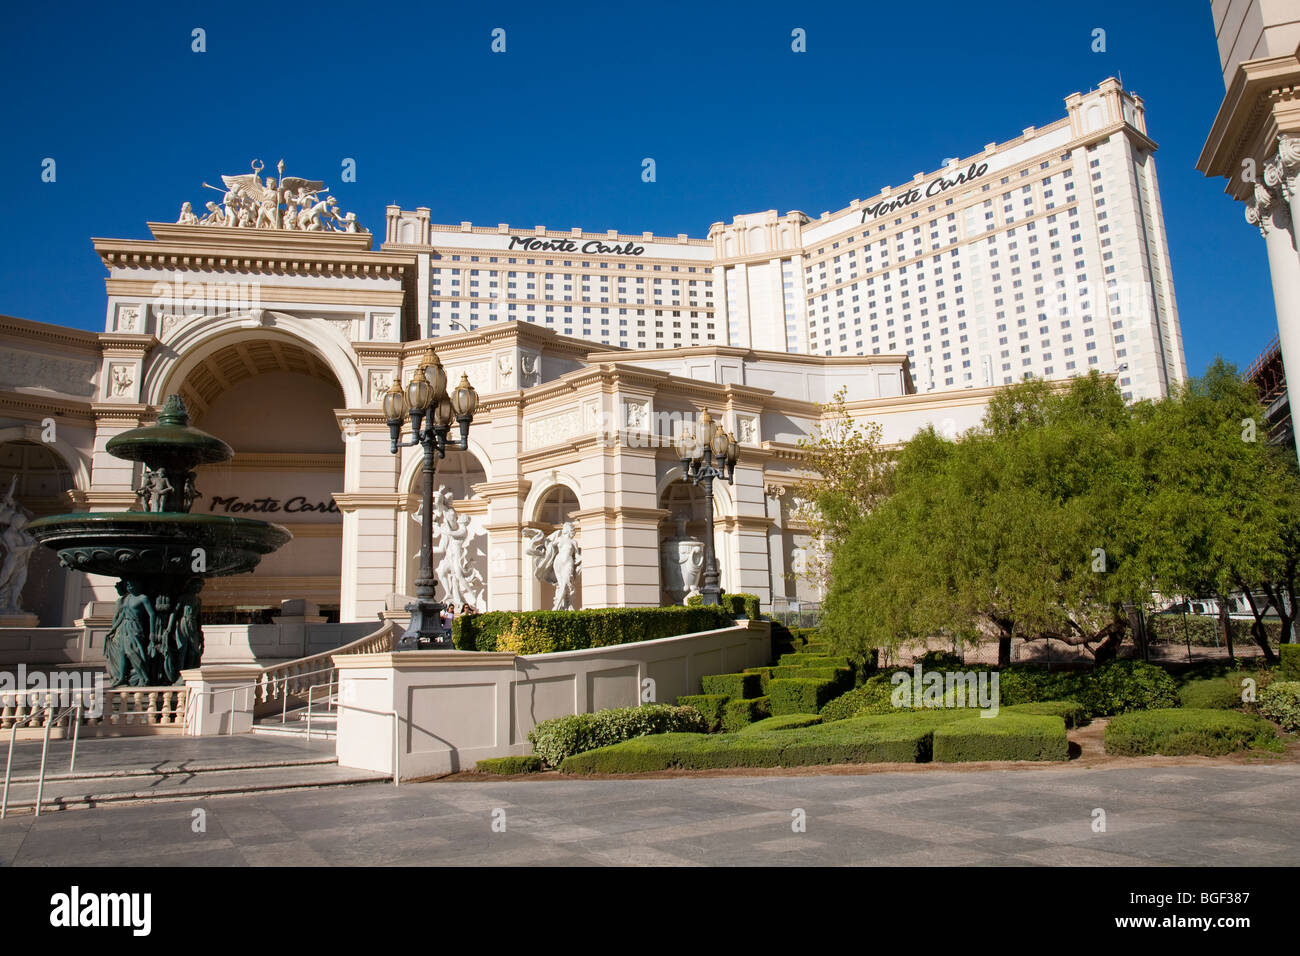 Monte Carlo casino and hotel, Las Vegas Strip Stock Photo